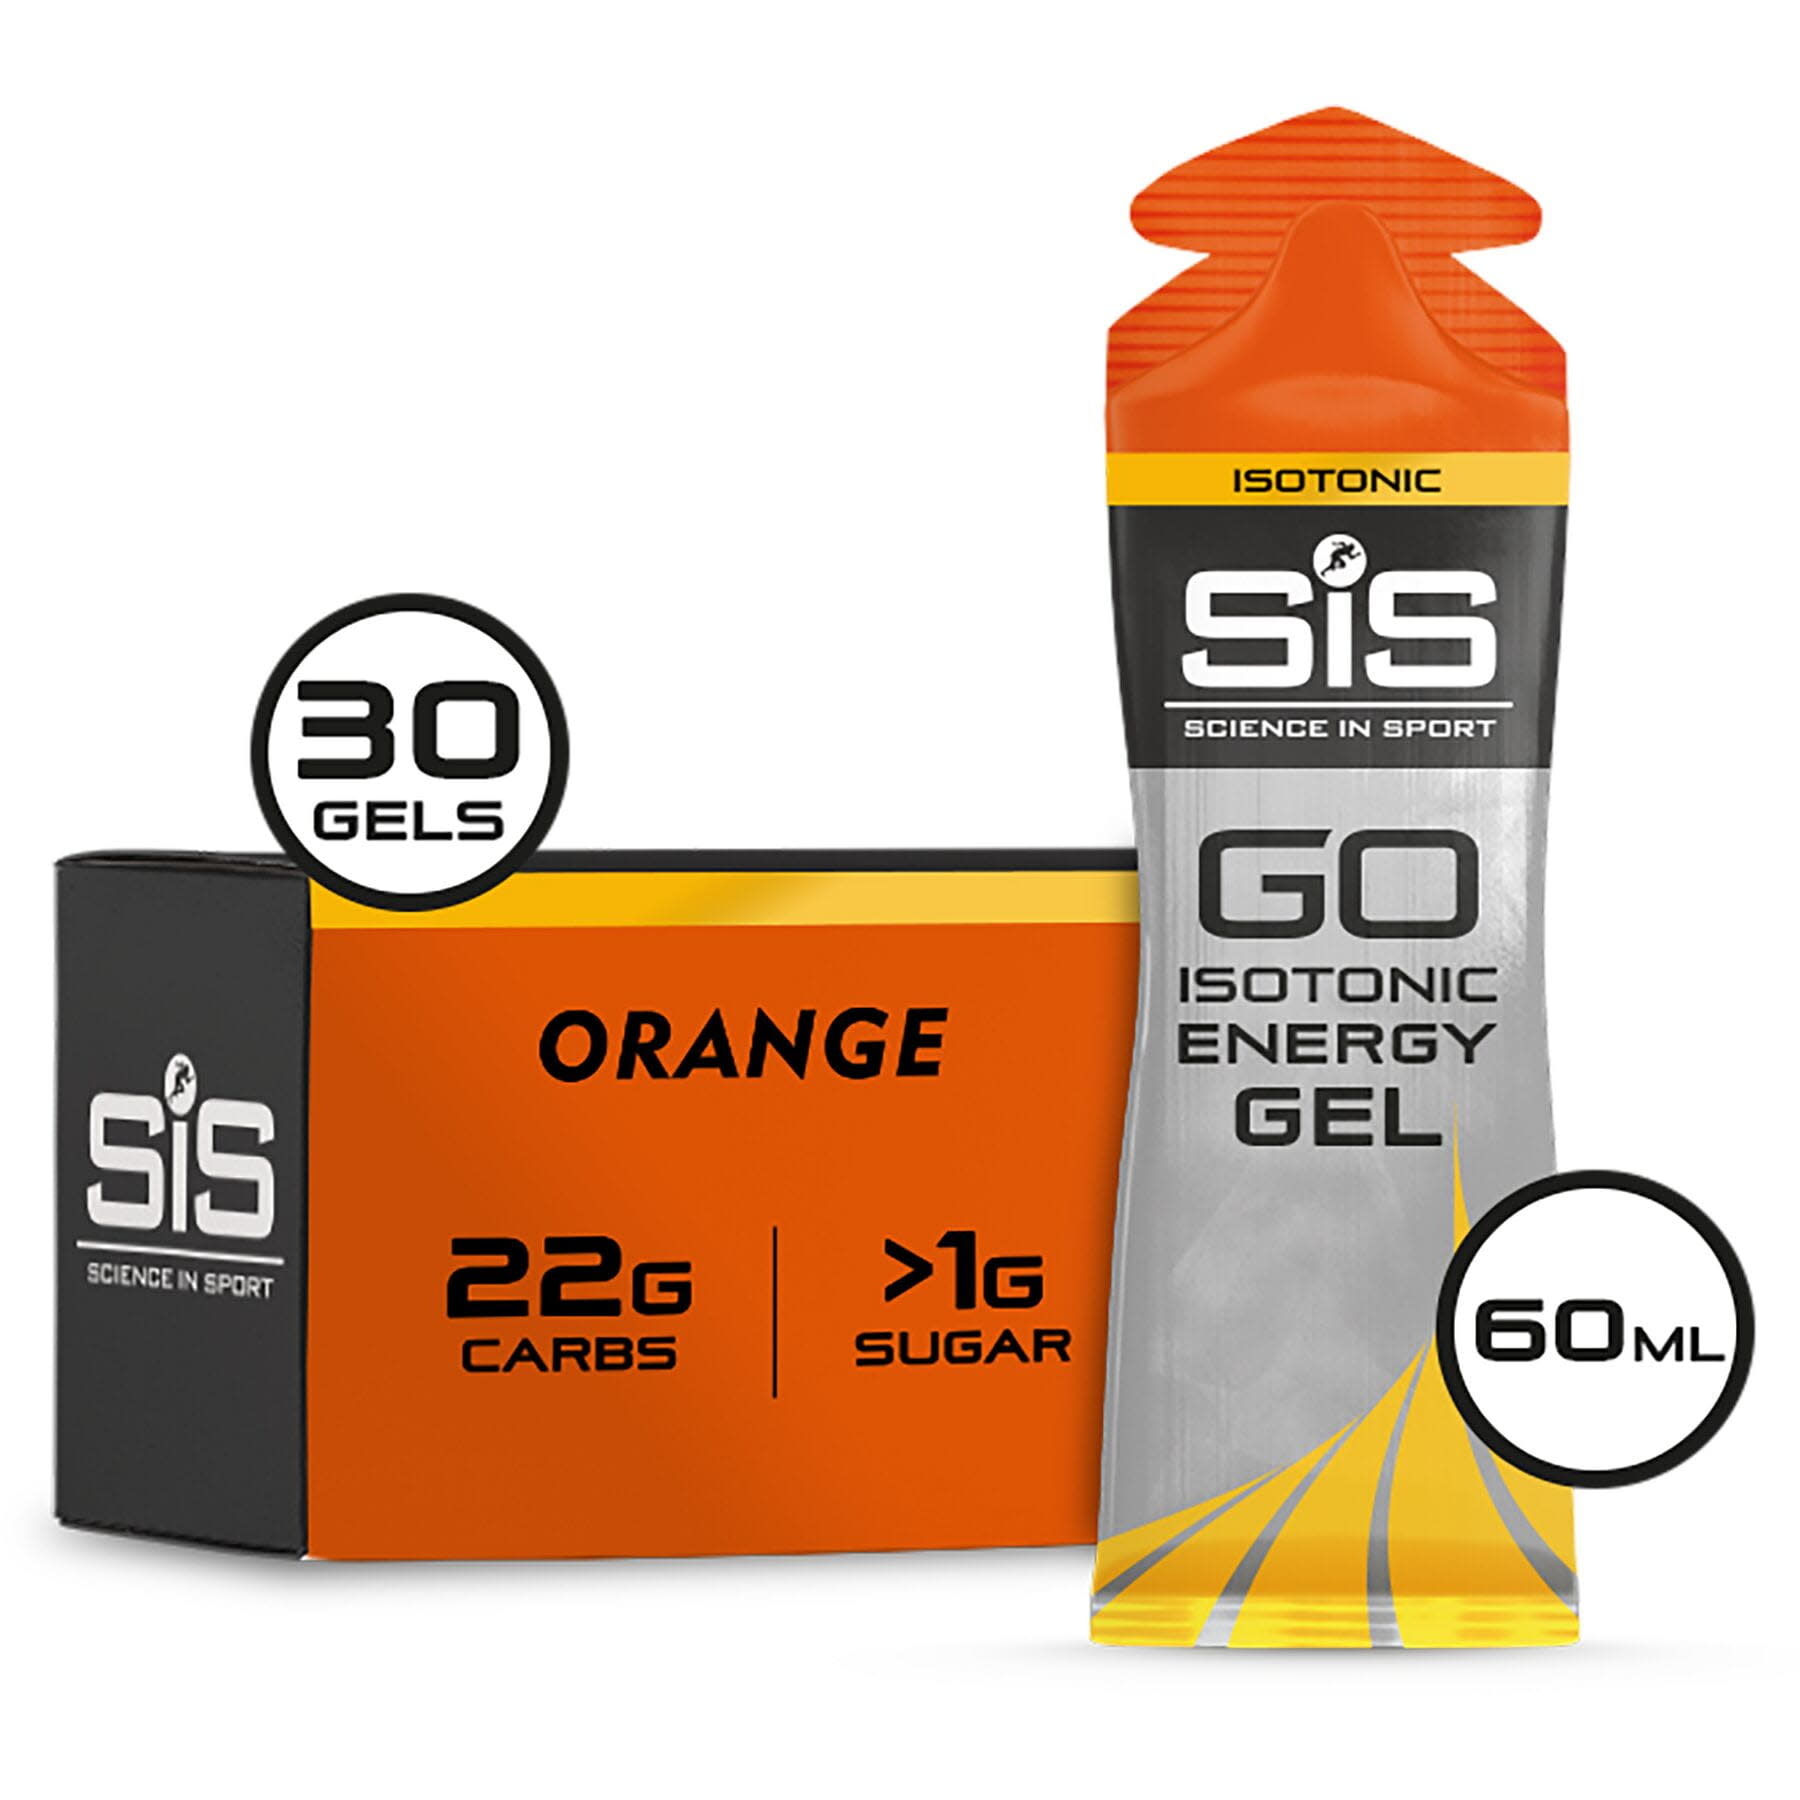 SiS - Orange GO Isotonic Energy Gel 60ml 6 Pack $14.99